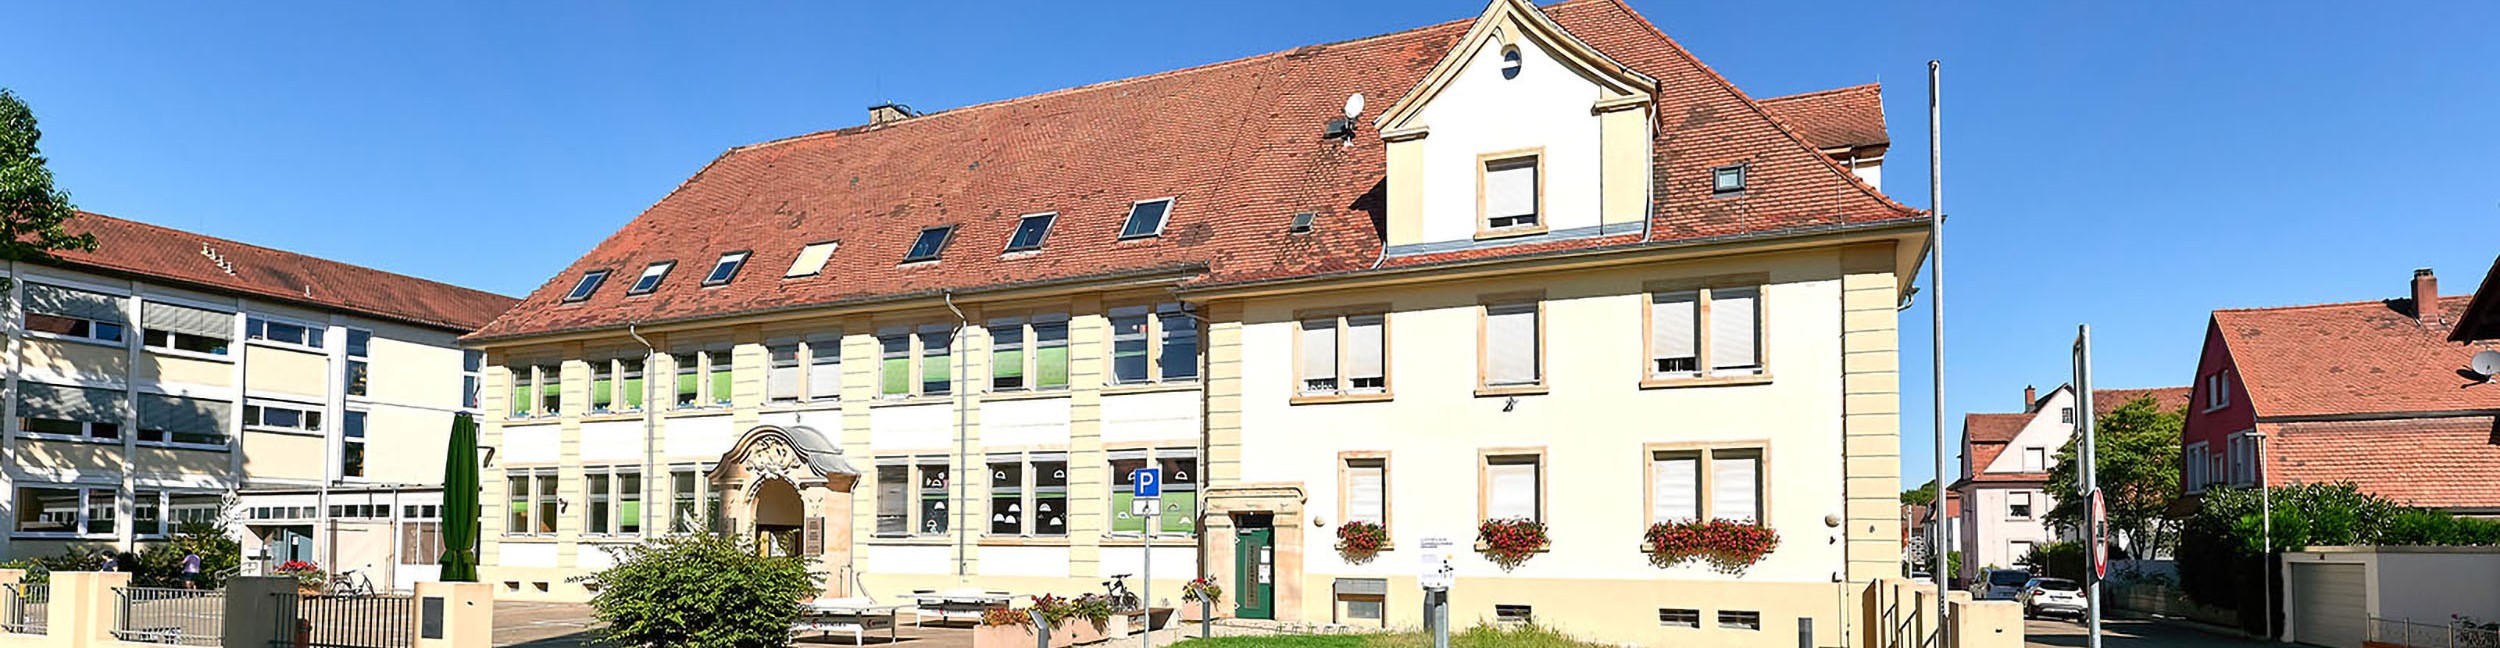 Niederbühl Town Hall